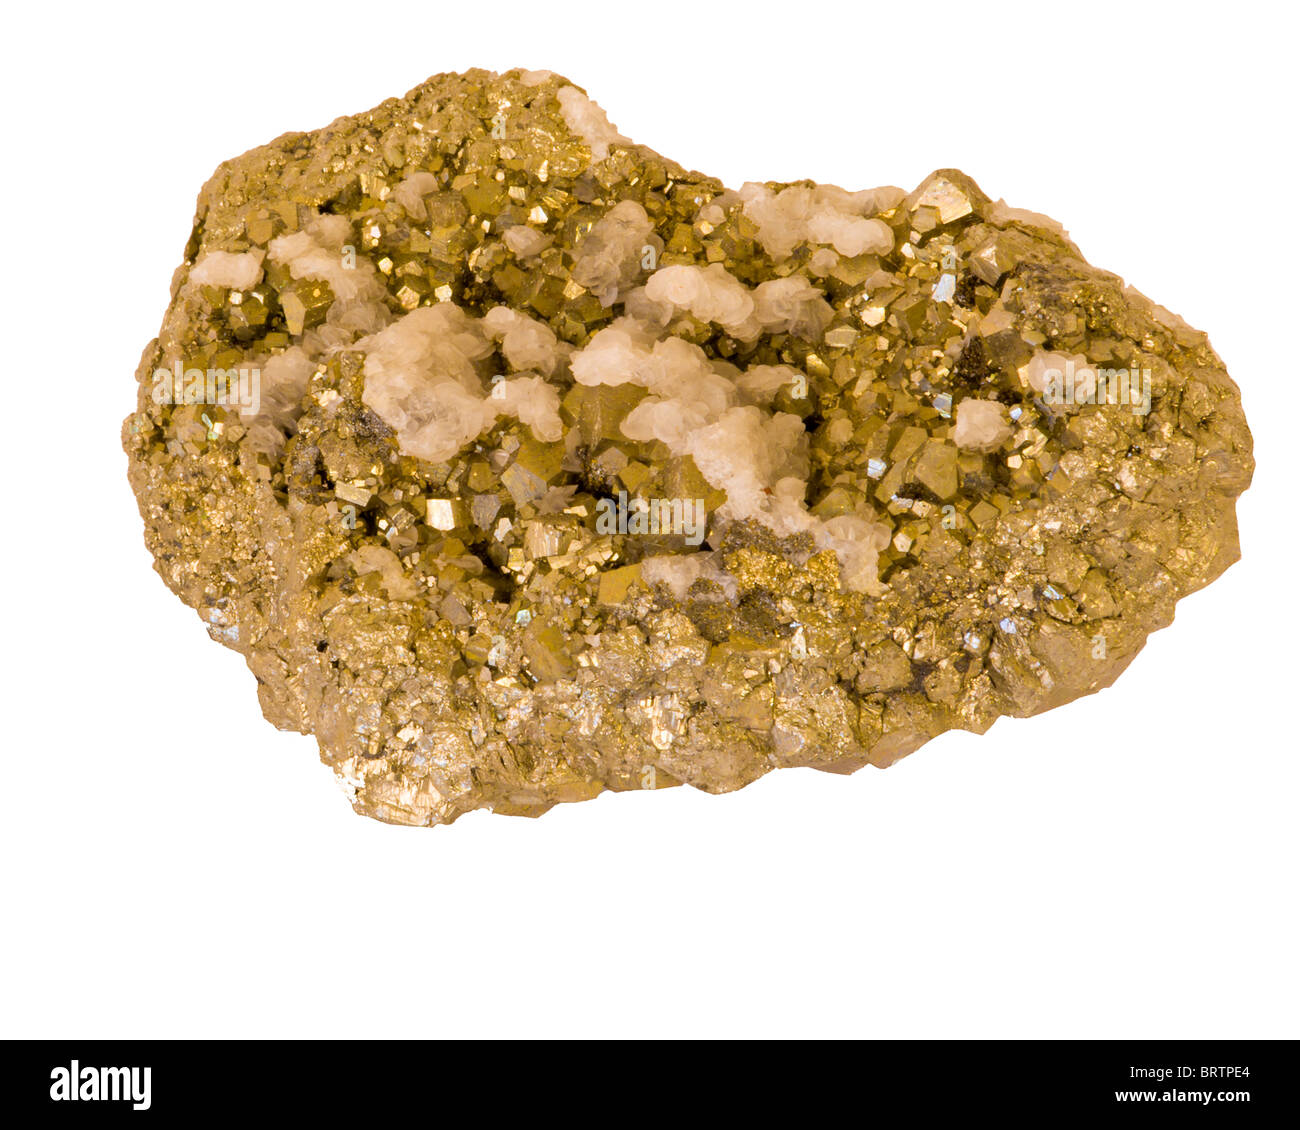 Iron Pyrite 'Fool's Gold' Stock Photo